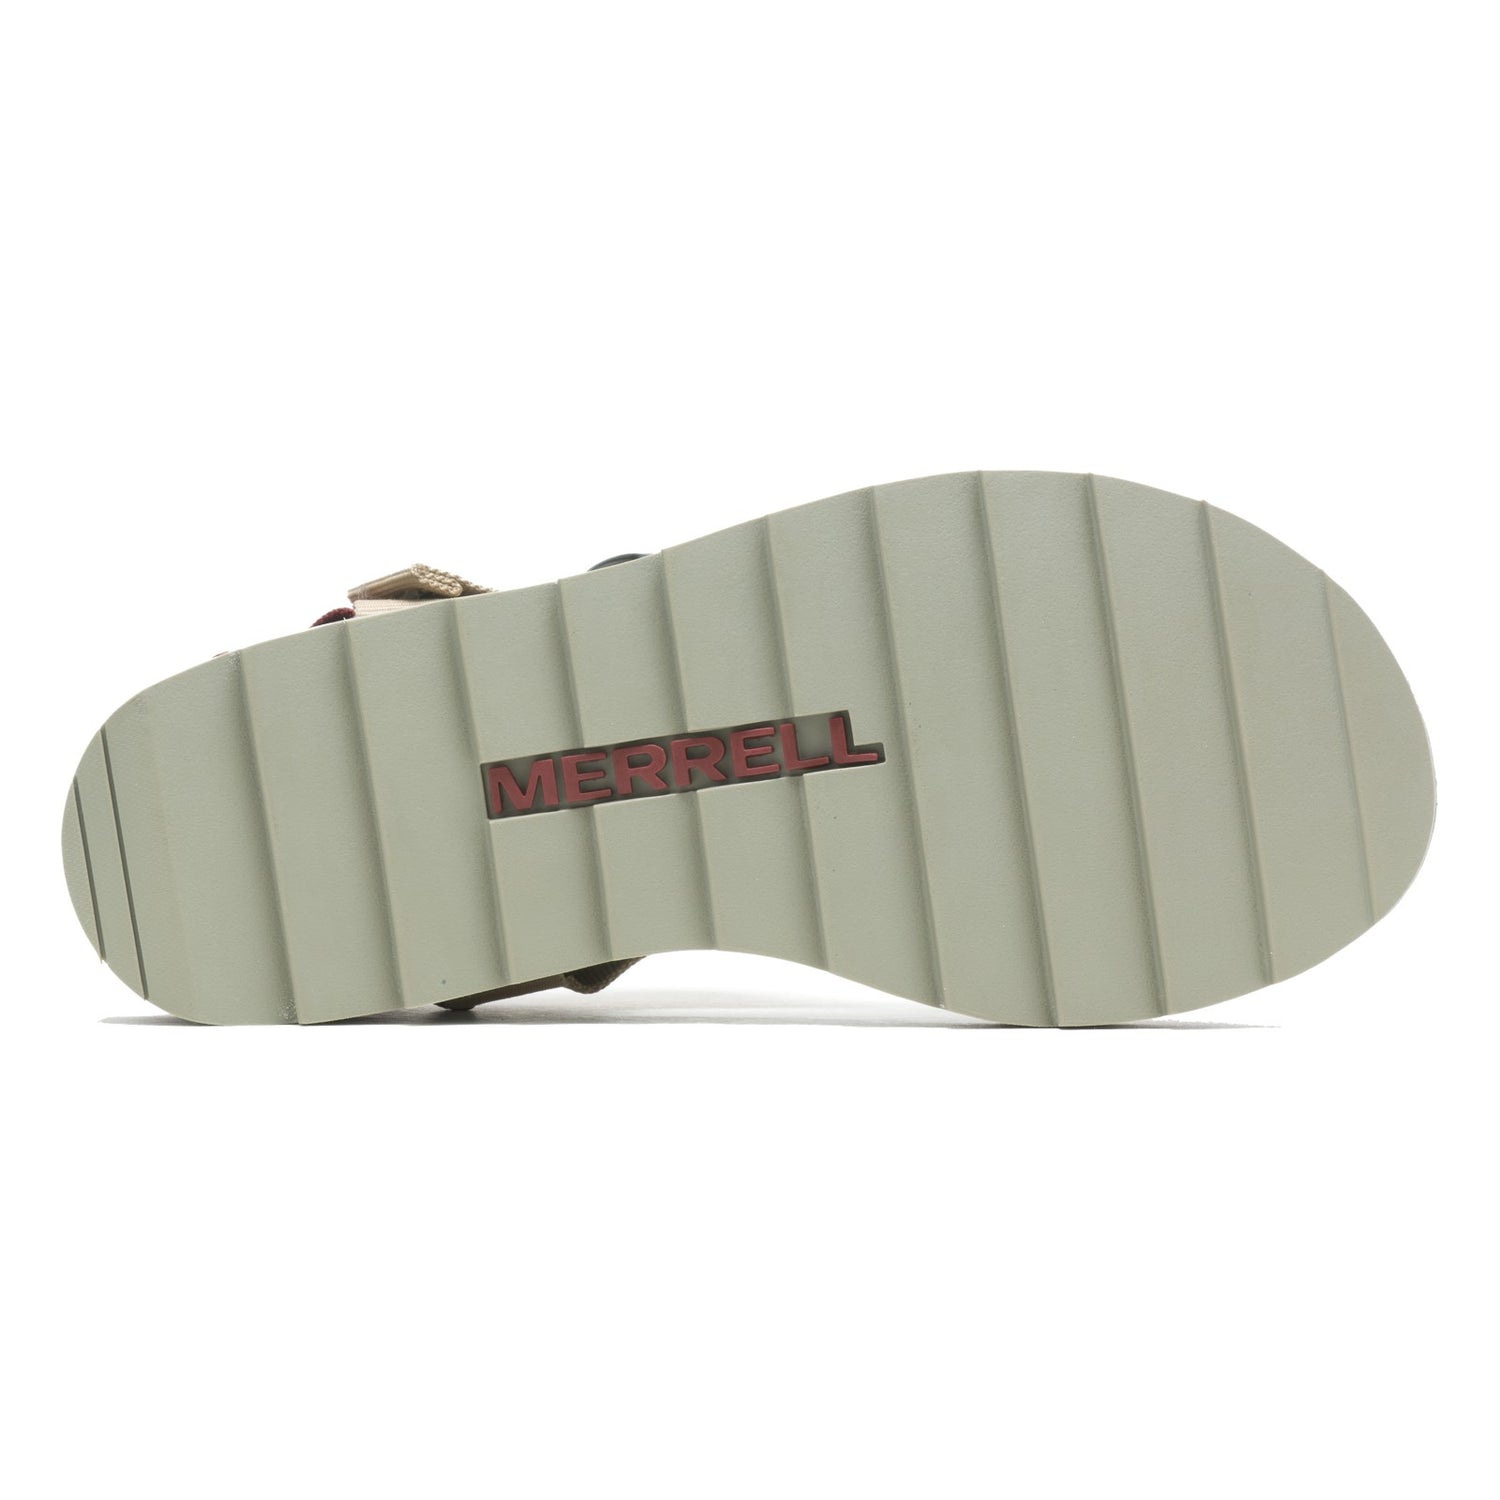 Peltz Shoes  Men's Merrell Alpine Strap Sandal CAMEL J003287